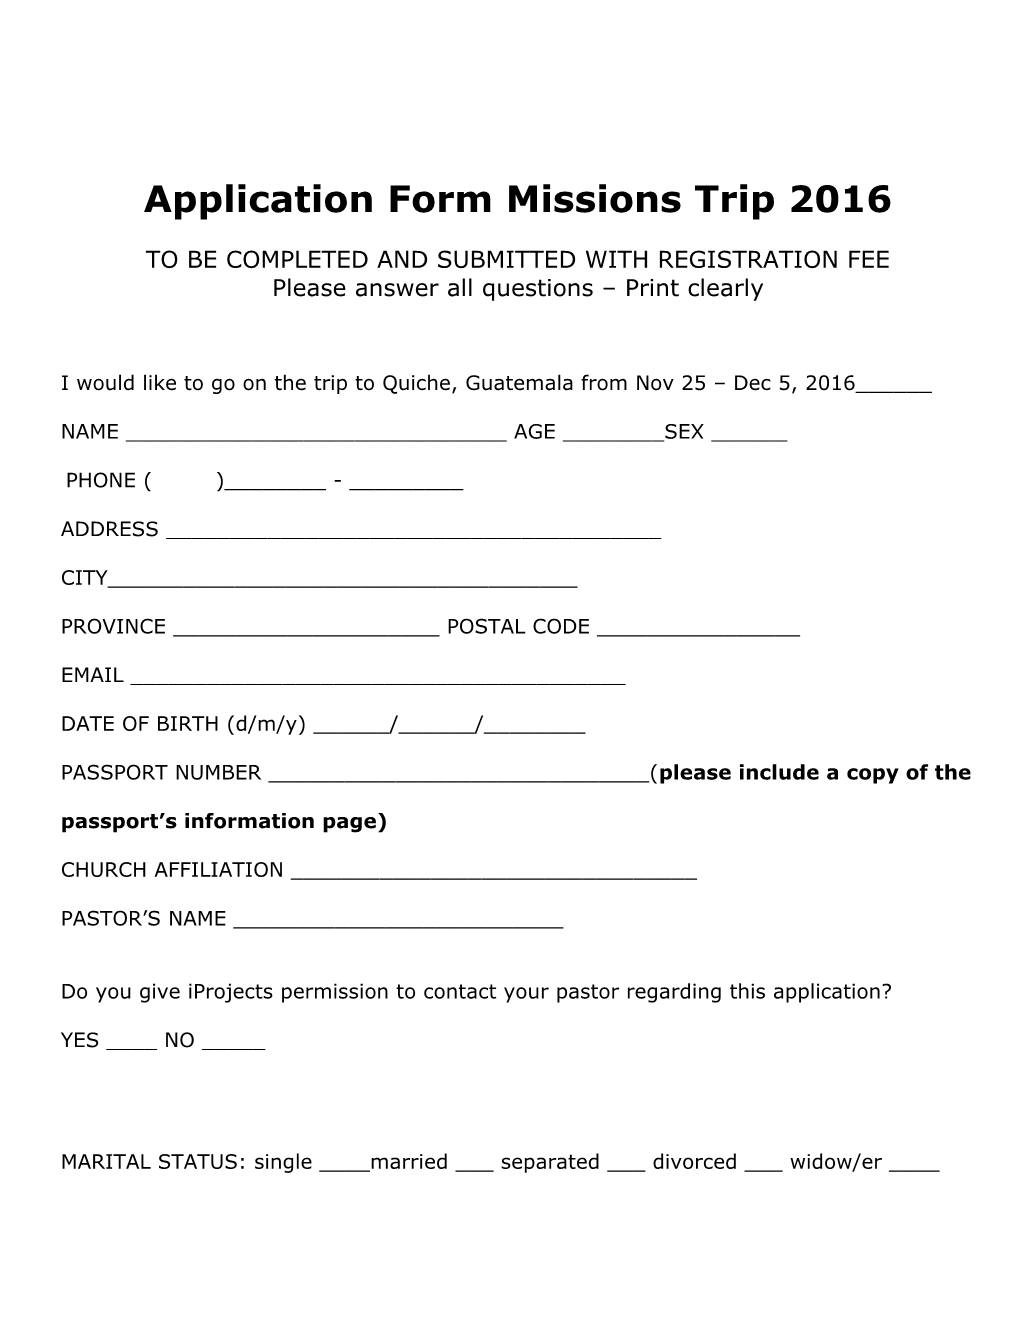 Application Form Missions Trip 2004